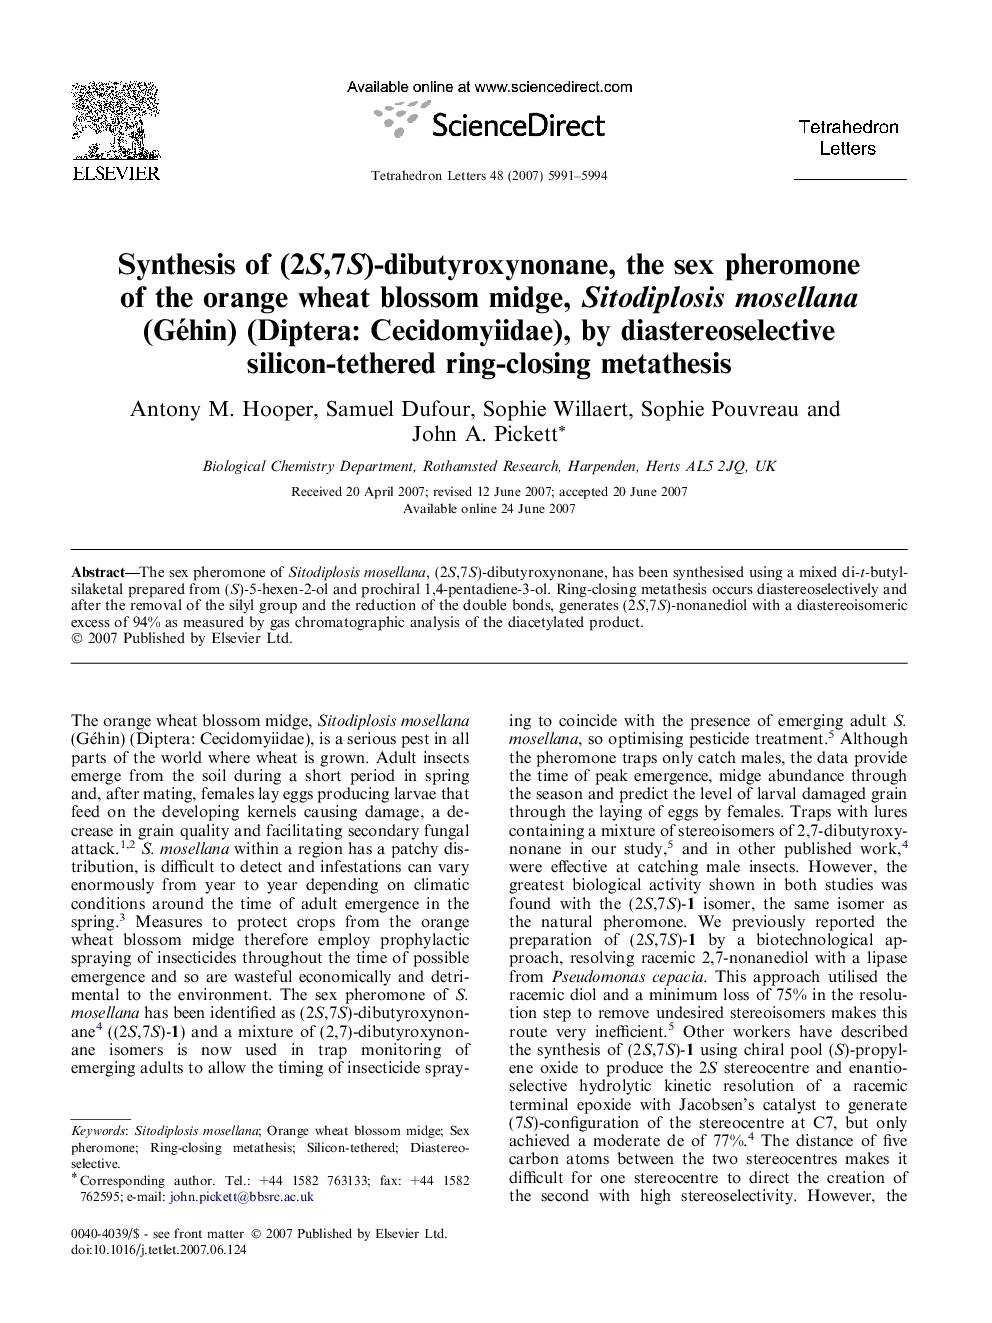 Synthesis of (2S,7S)-dibutyroxynonane, the sex pheromone of the orange wheat blossom midge, Sitodiplosis mosellana (Géhin) (Diptera: Cecidomyiidae), by diastereoselective silicon-tethered ring-closing metathesis